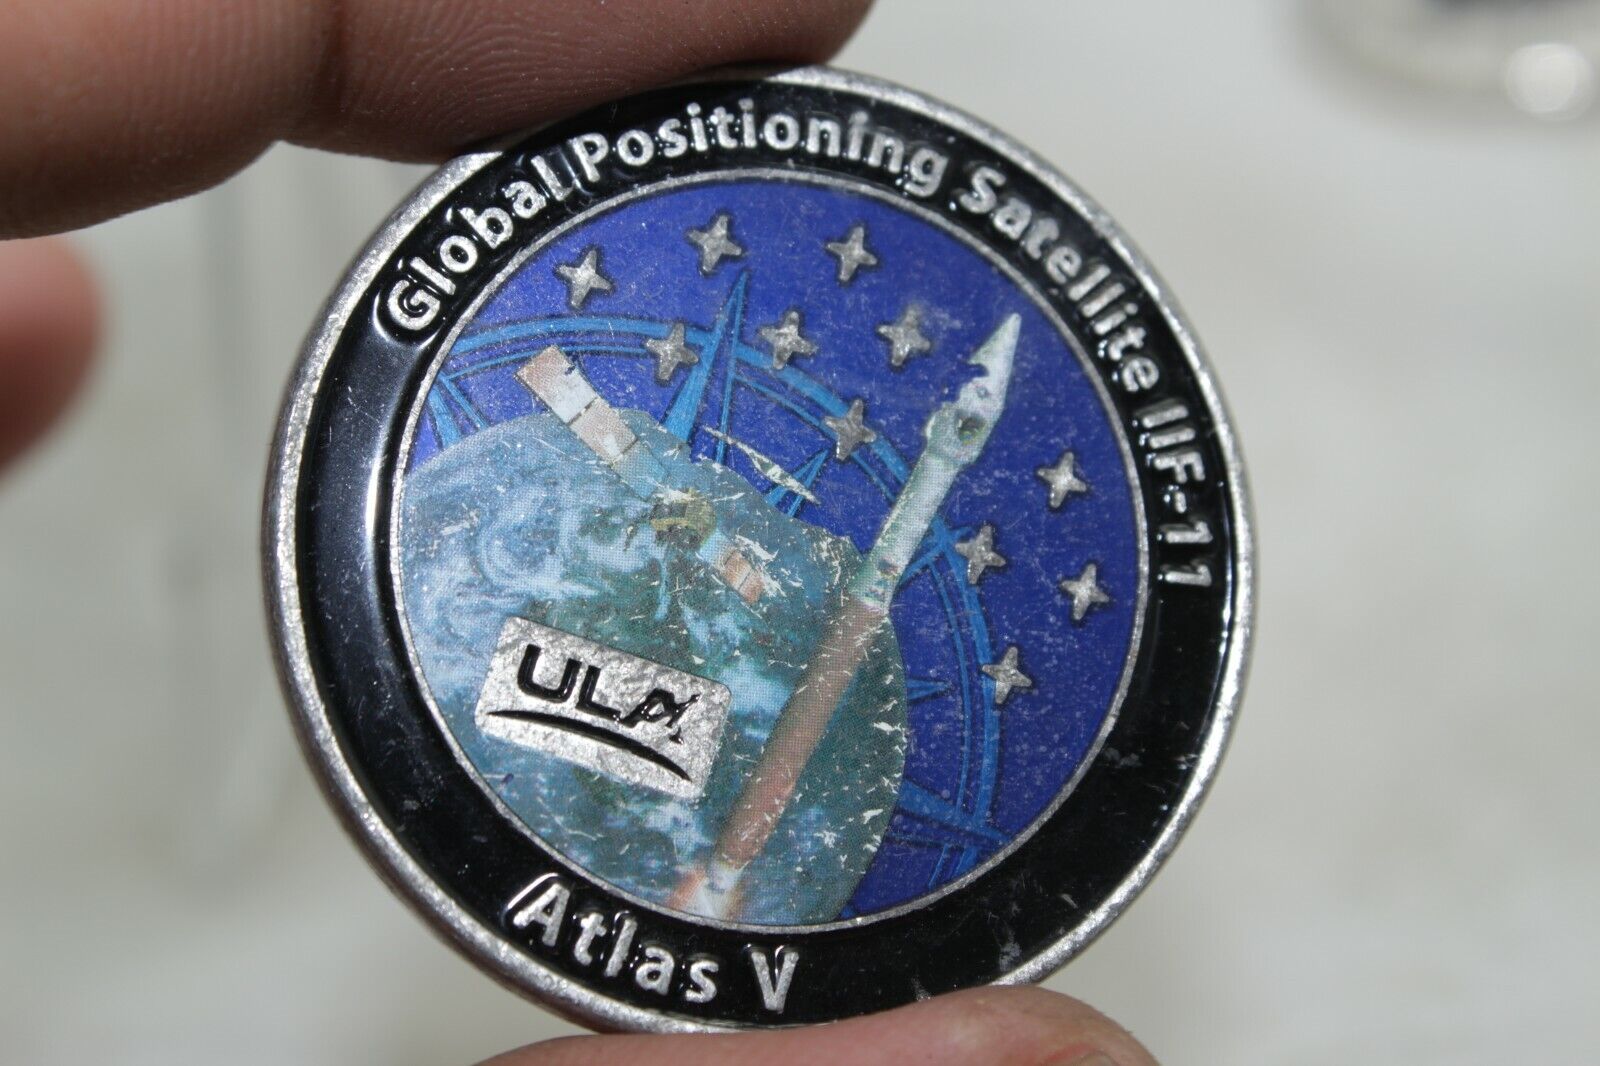 Global Positioning Satellite IIF-11 Atlas V Challenge Coin